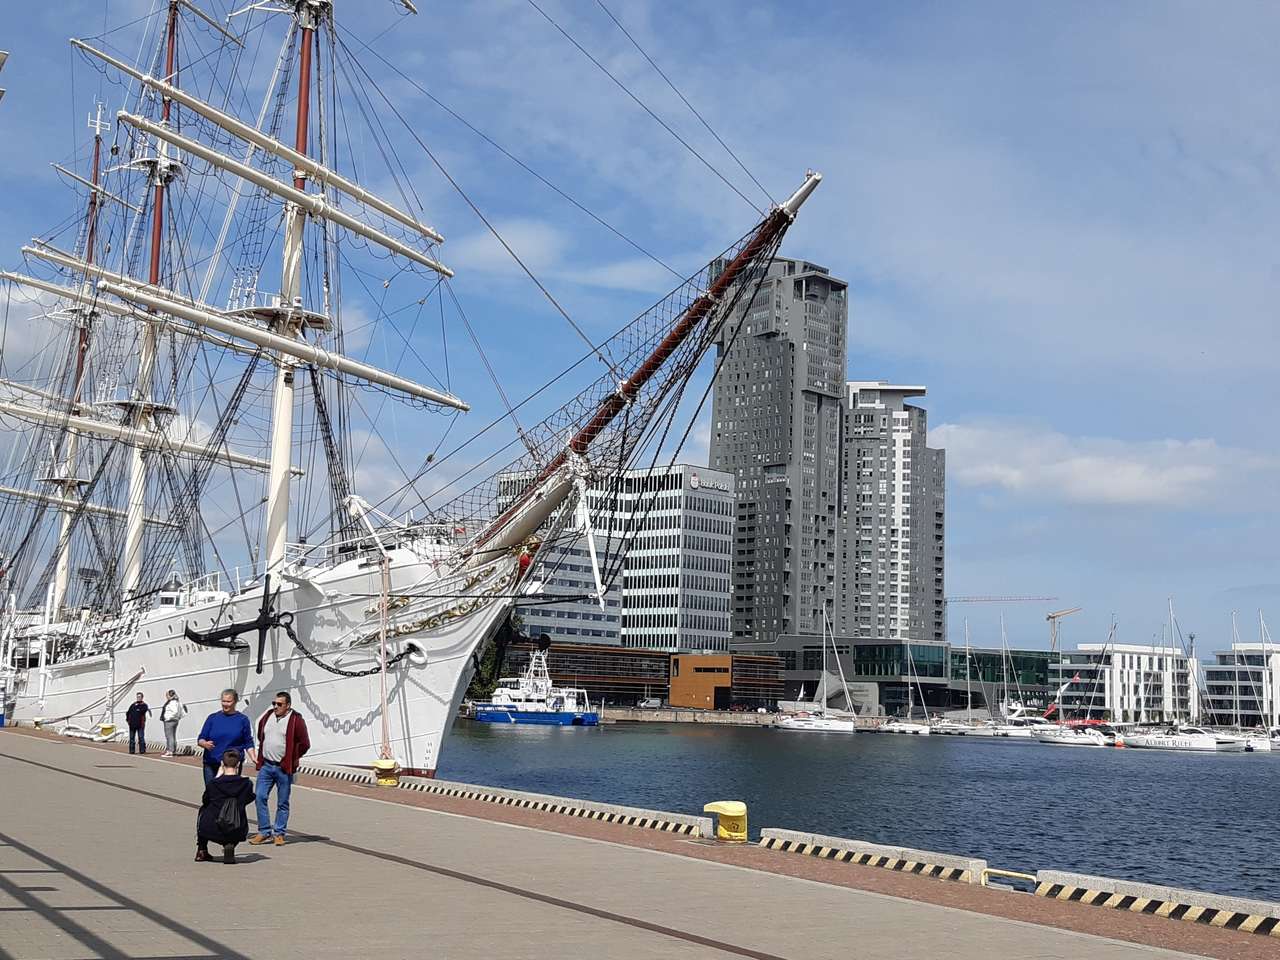 kade in Gdynia en een schip legpuzzel online